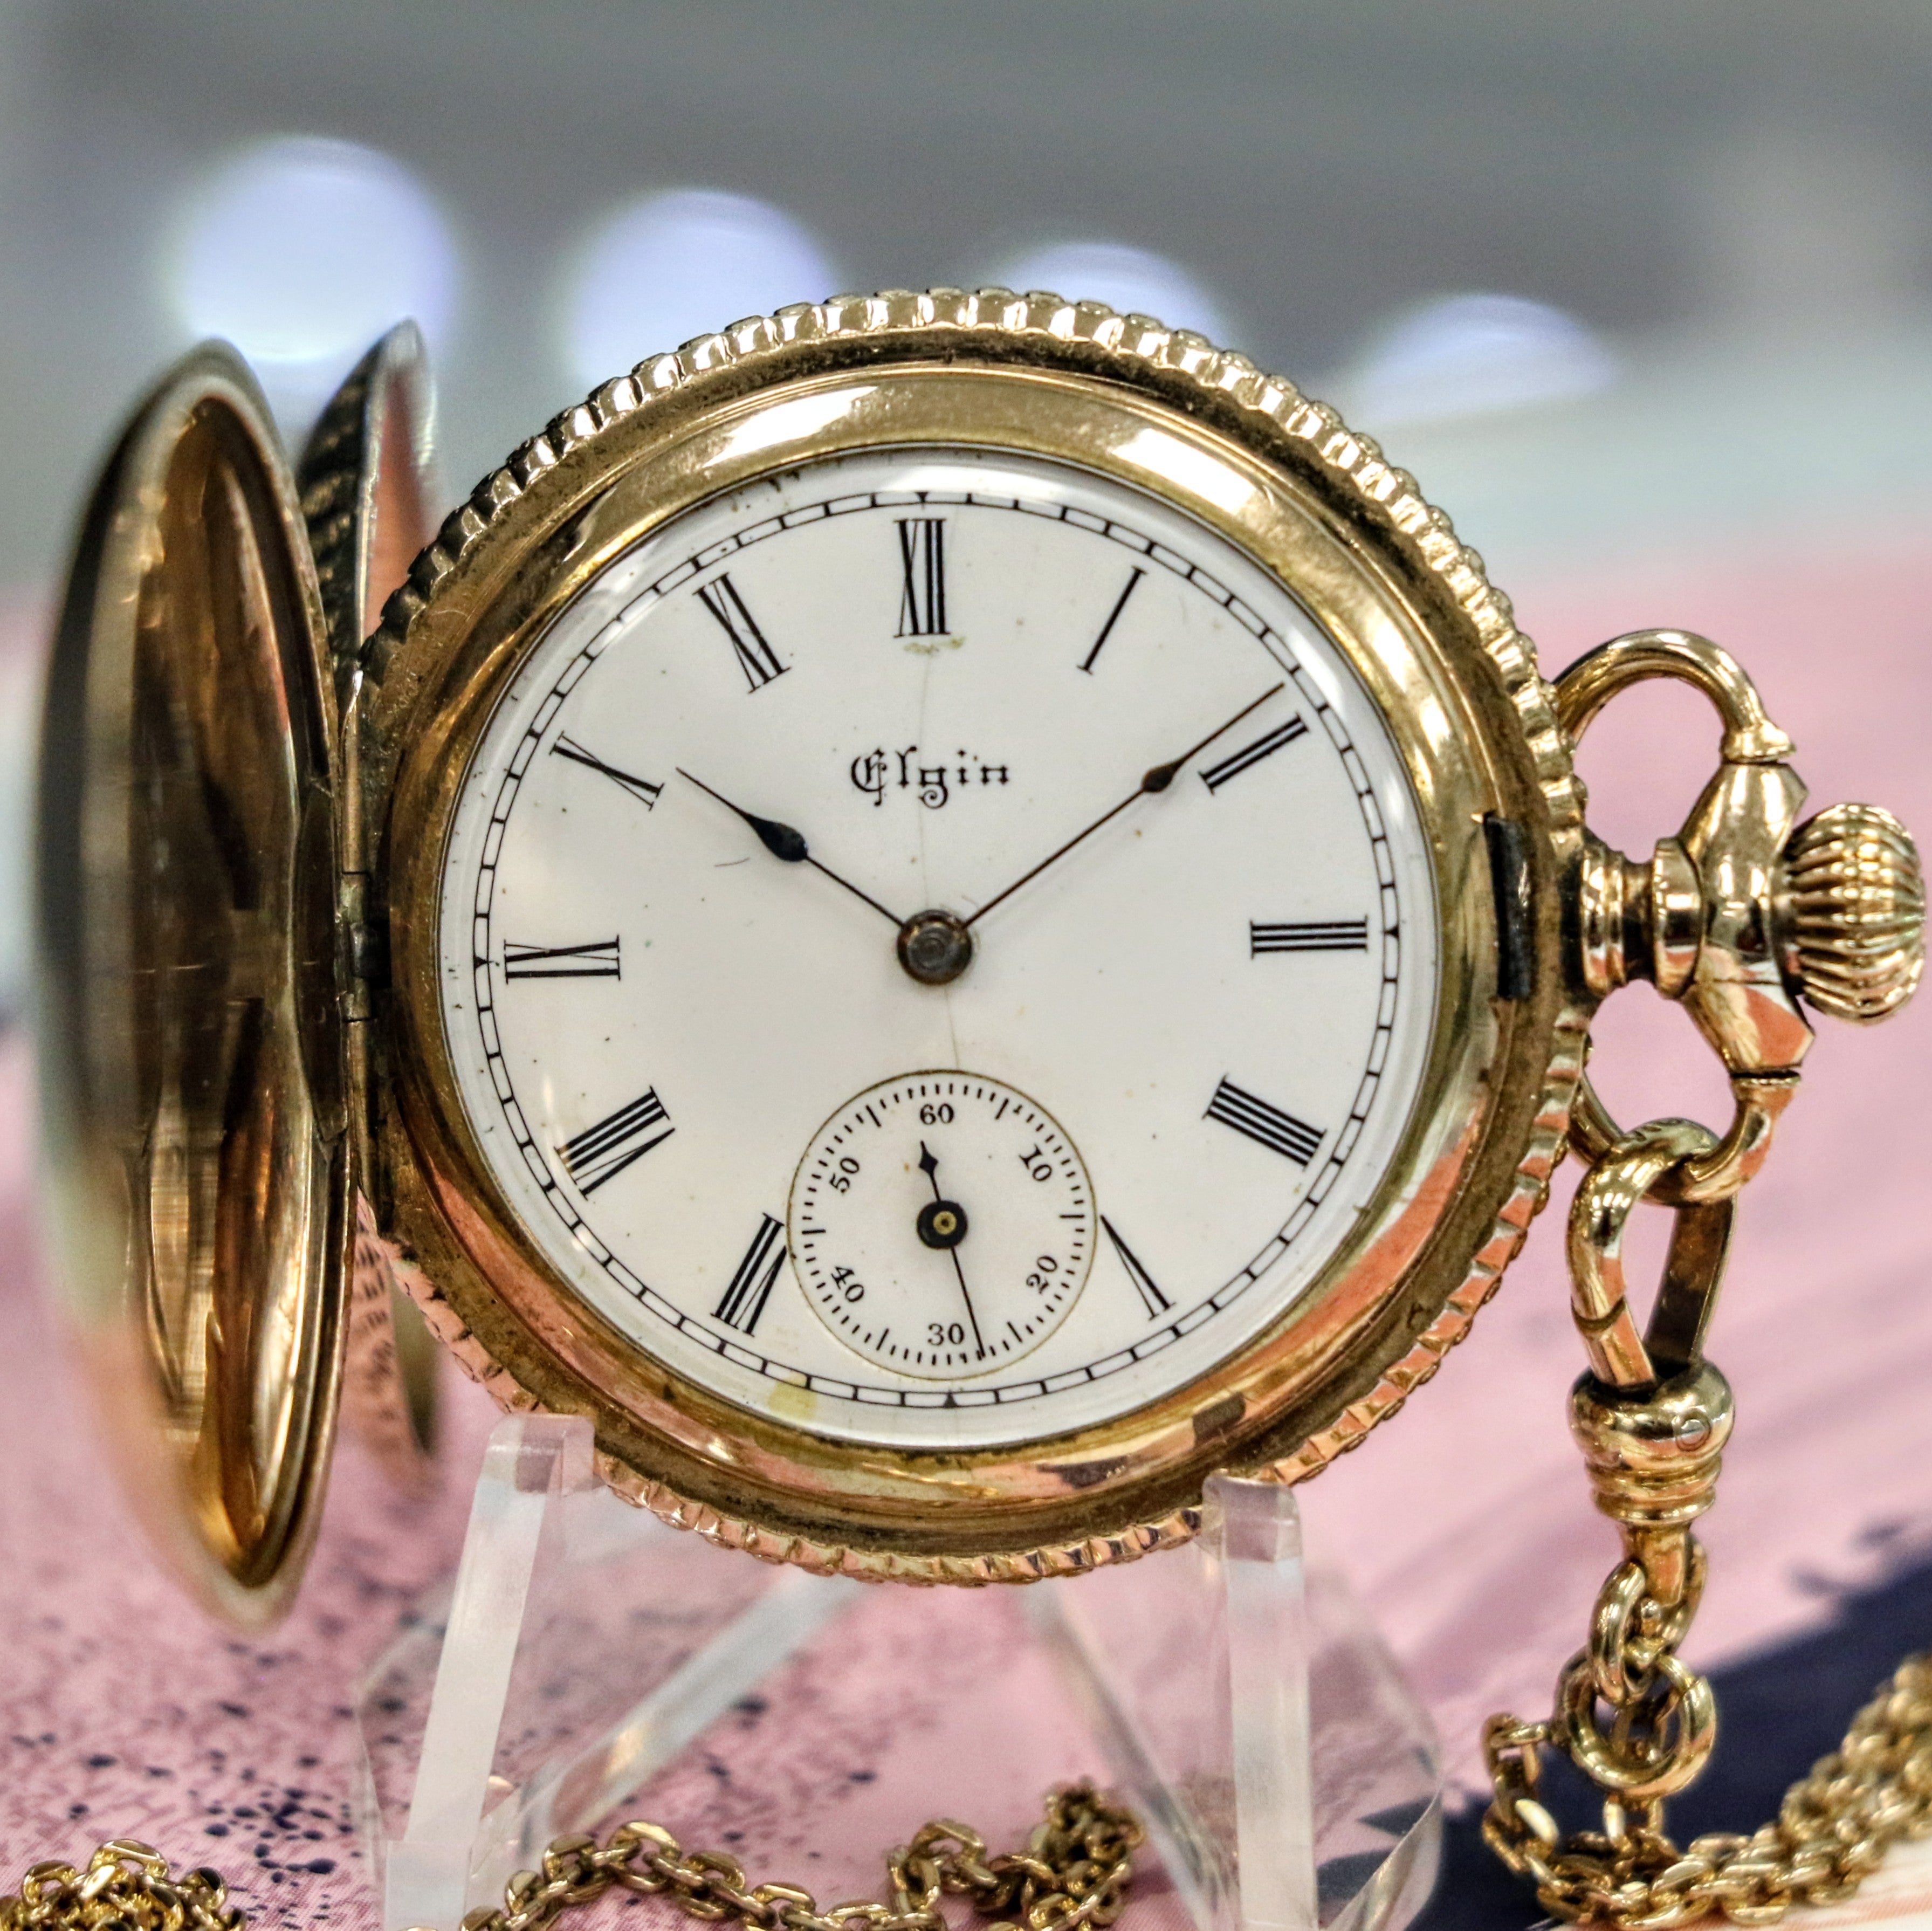 1897 ELGIN Dress Pocket Watch 0s 15 Jewels Grade 130 Model 1 U.S.A. Made - Engraved Case